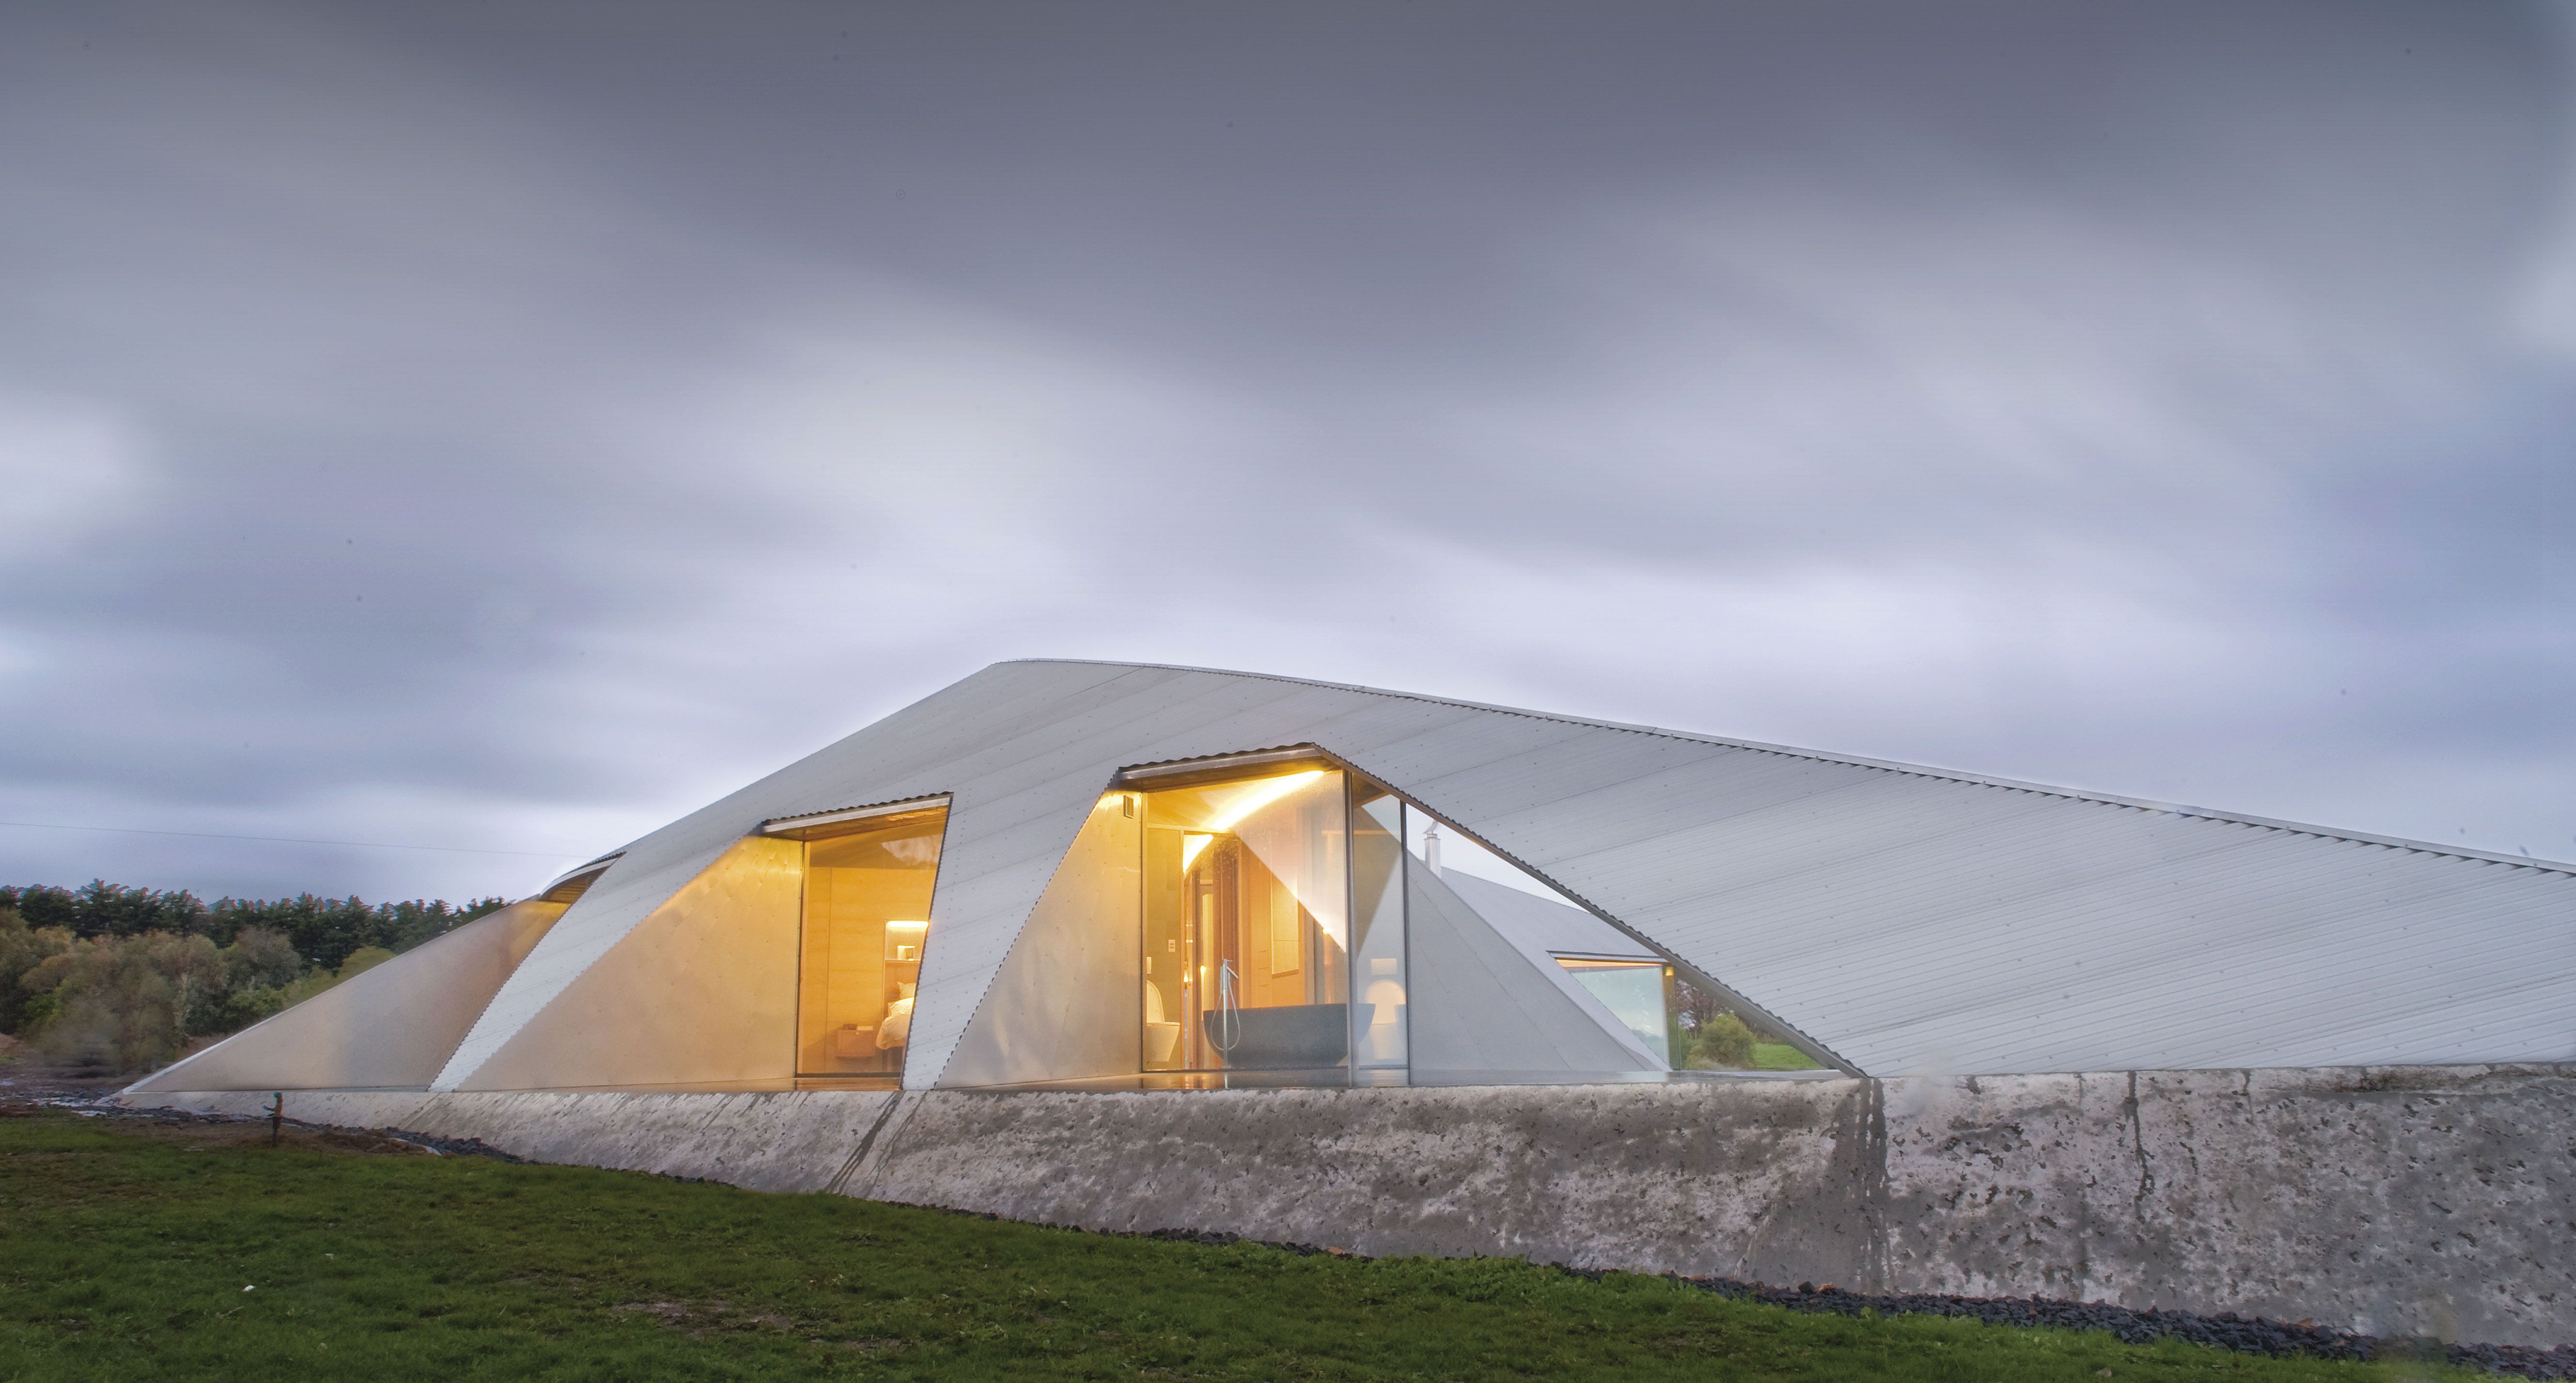 Una casa futurista sostenible e integrada en el paisaje